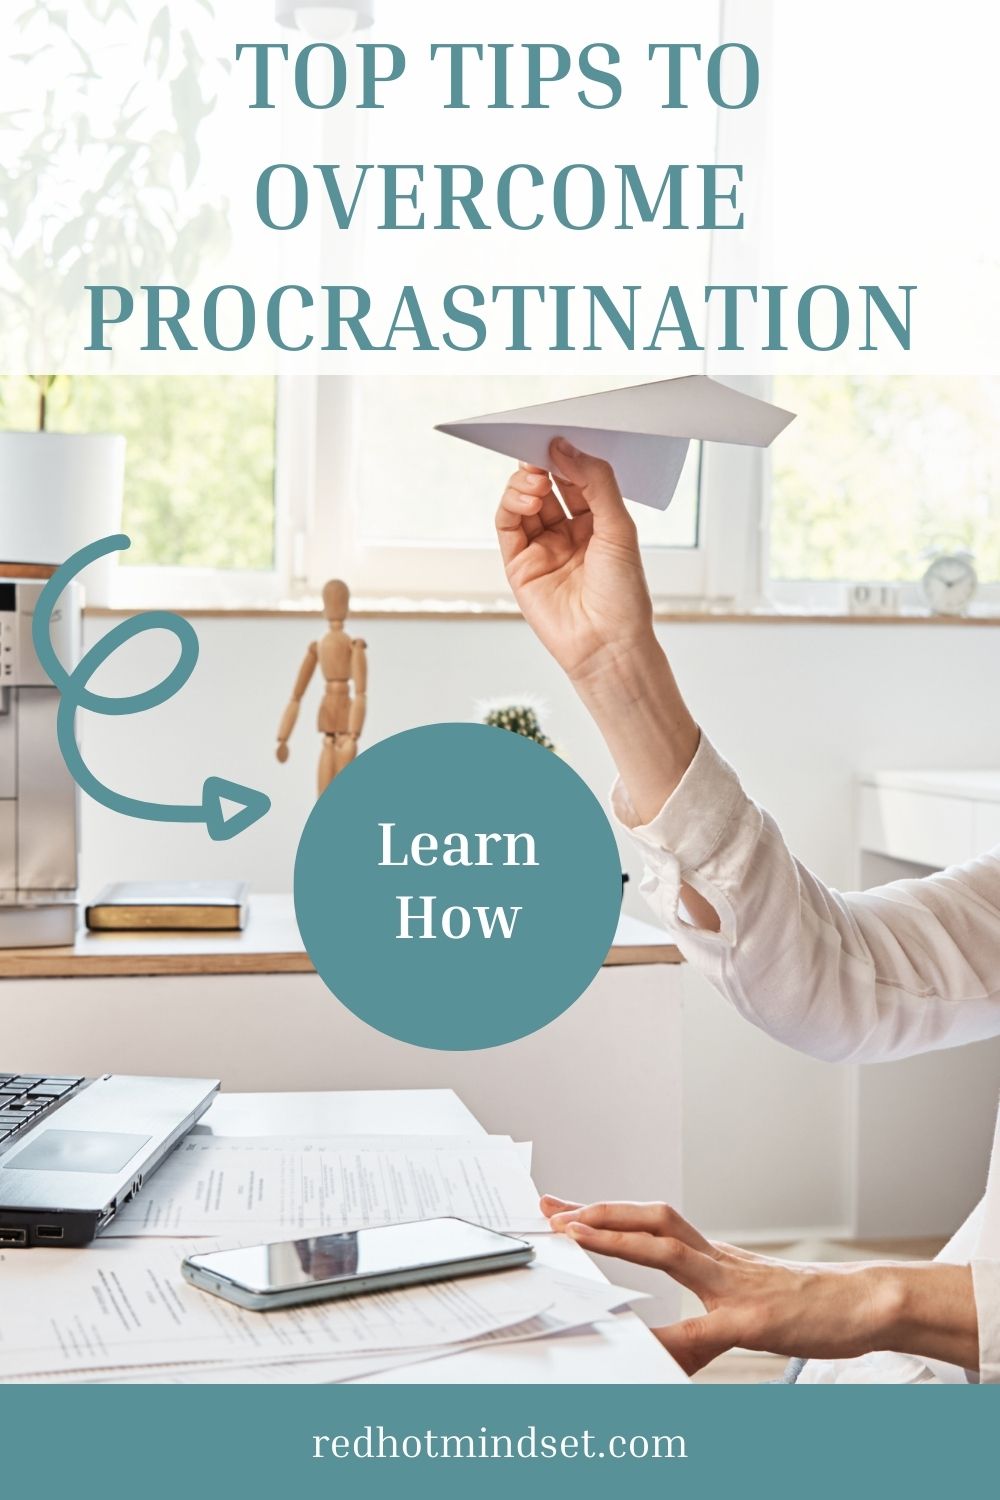 Top tips to overcome procrastination - Pinterest